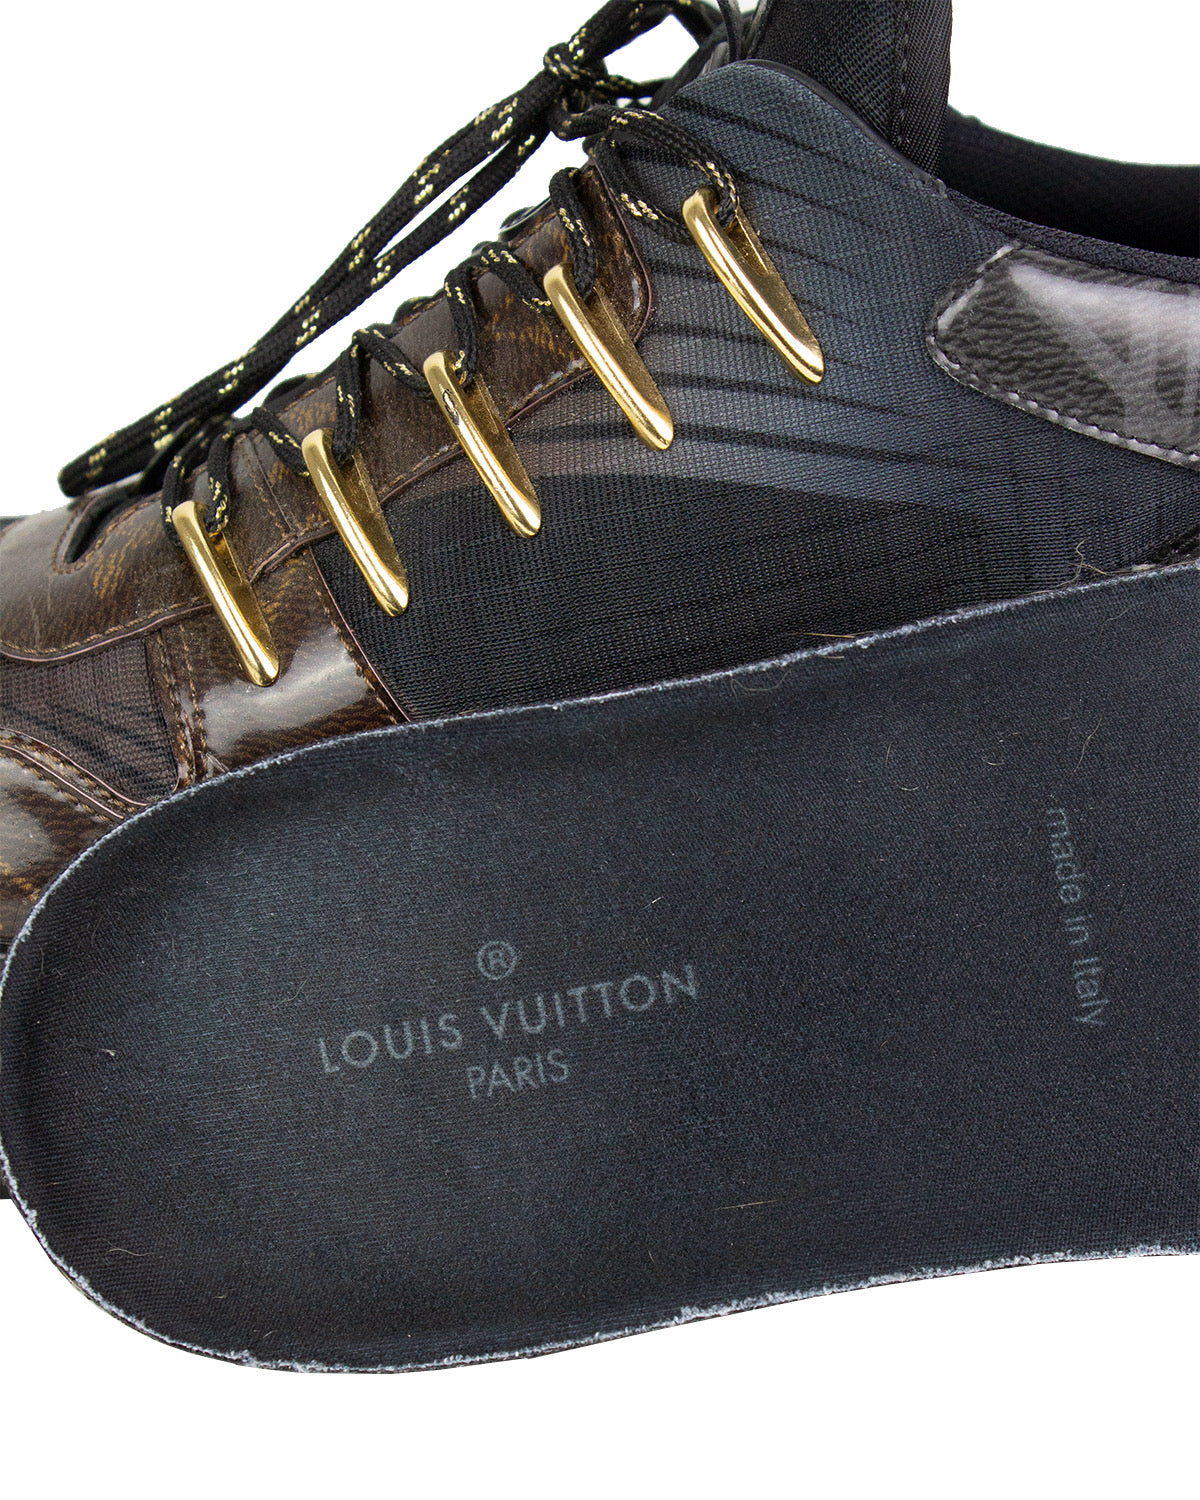 LOUIS VUITTON Runaway pulse taille 43eu sneakers neuve